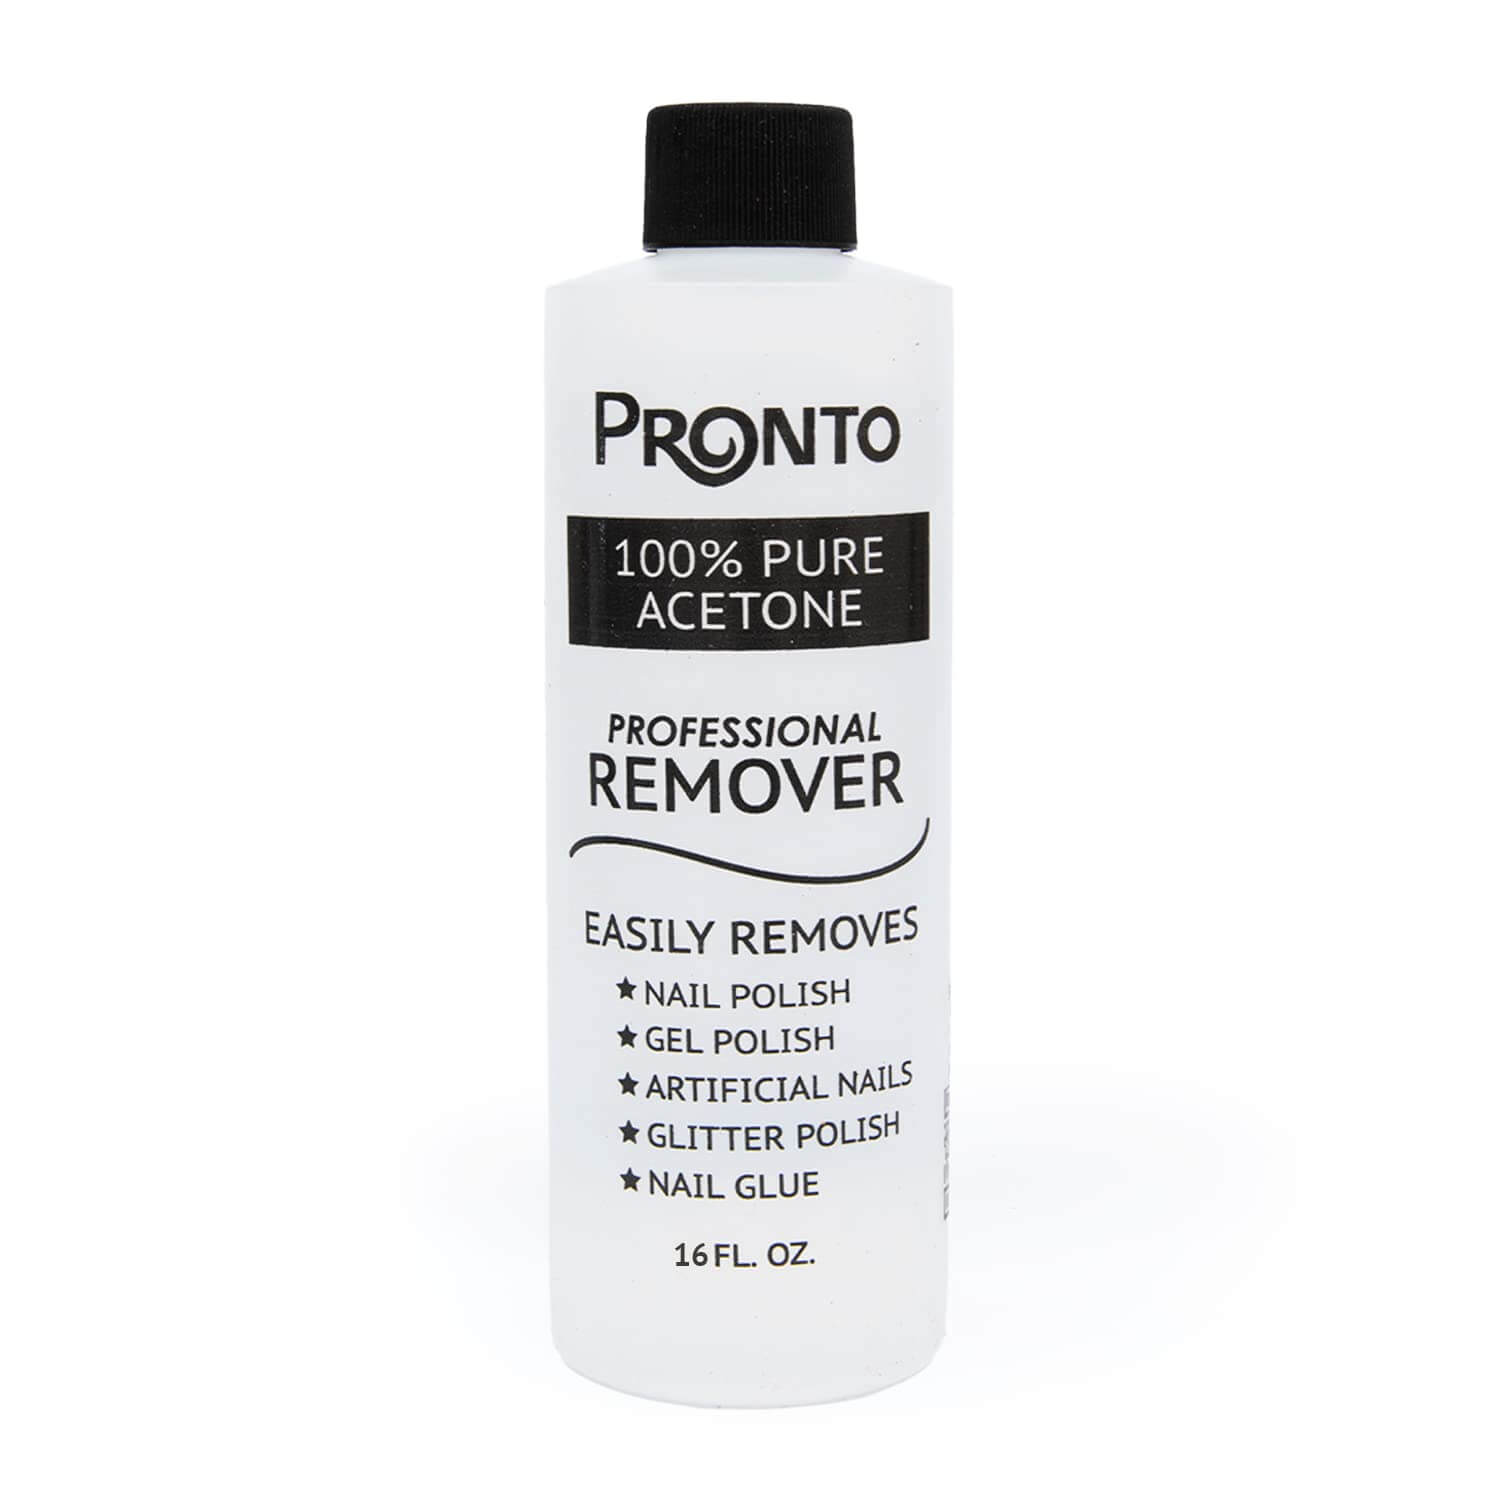 Pronto 100% Acetone Nail Polish Remover